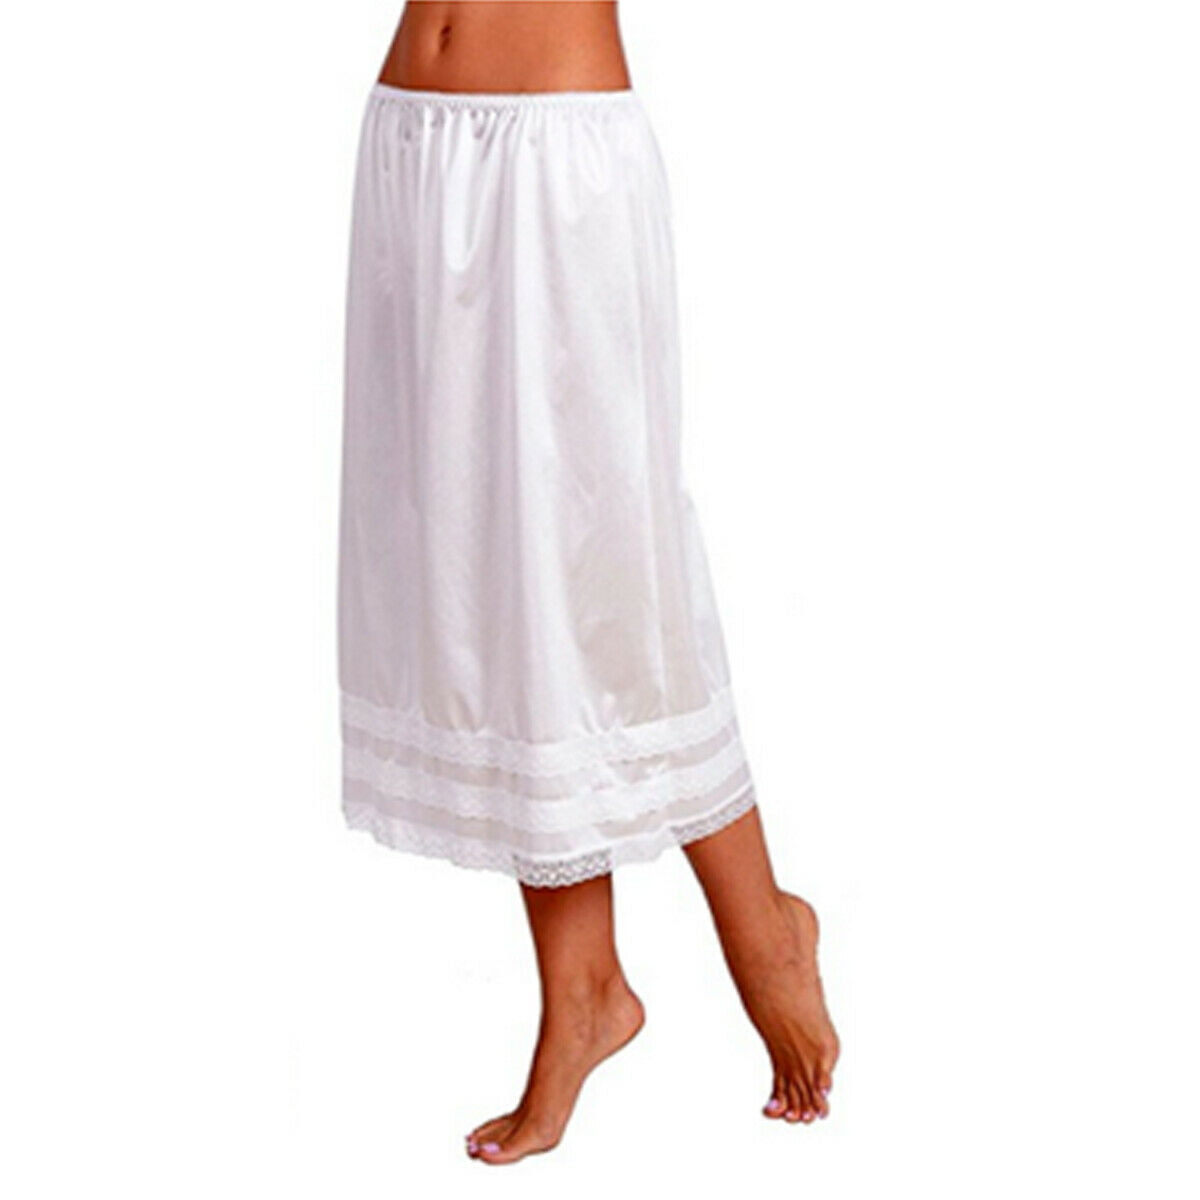 Ladies Polyester Underskirt Waist Half Slip Petticoat White